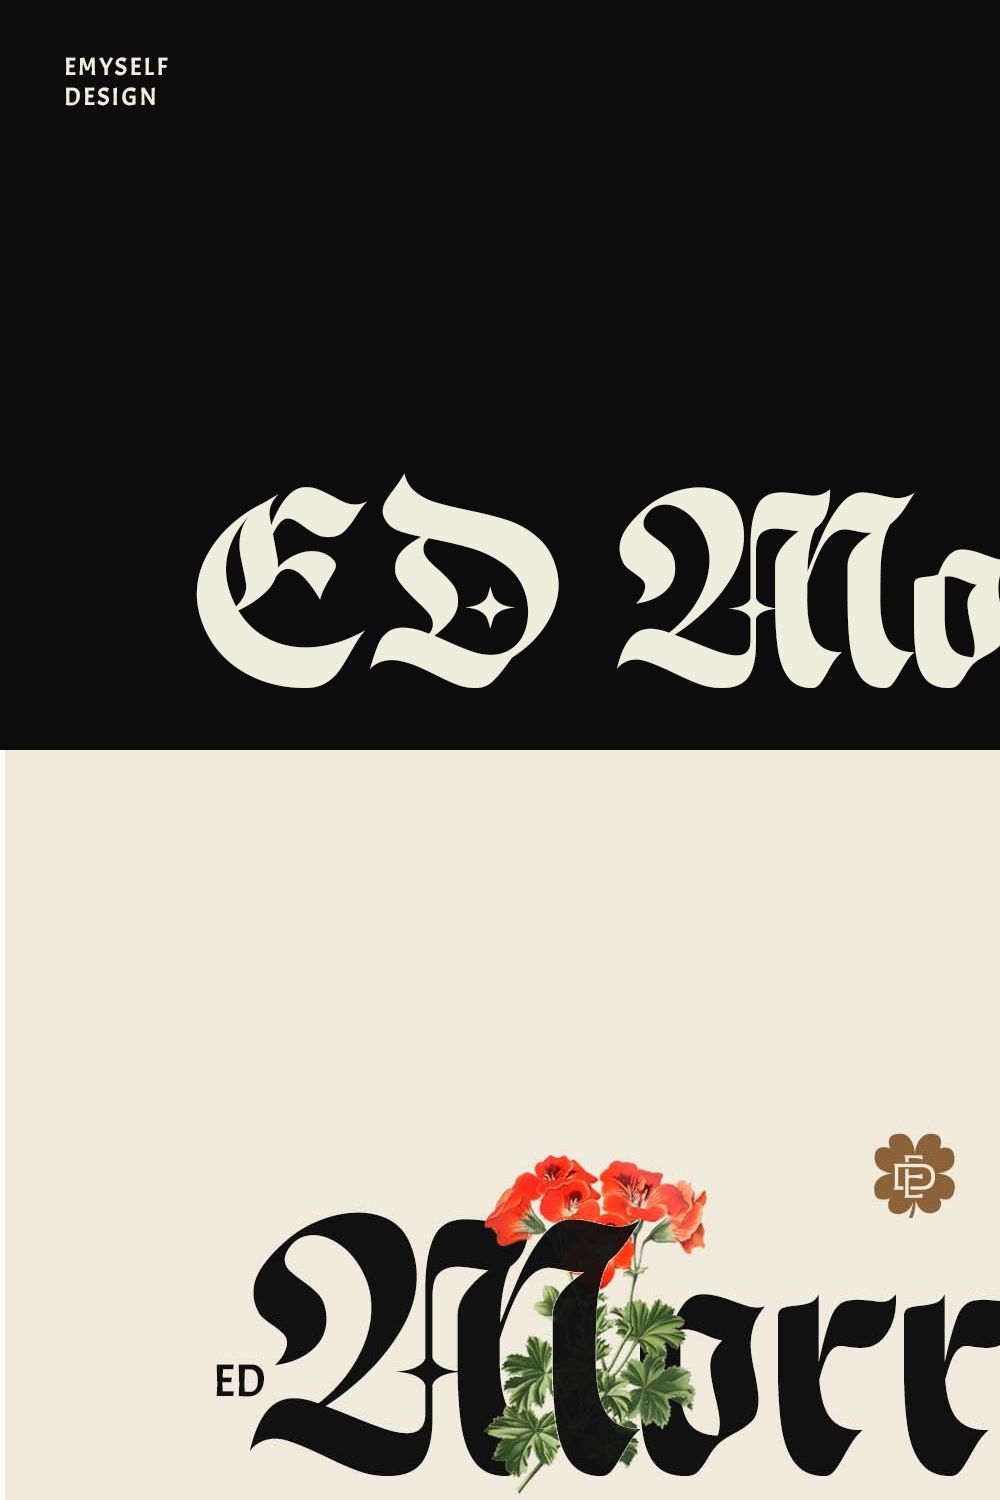 ED Morrigan Typeface pinterest preview image.